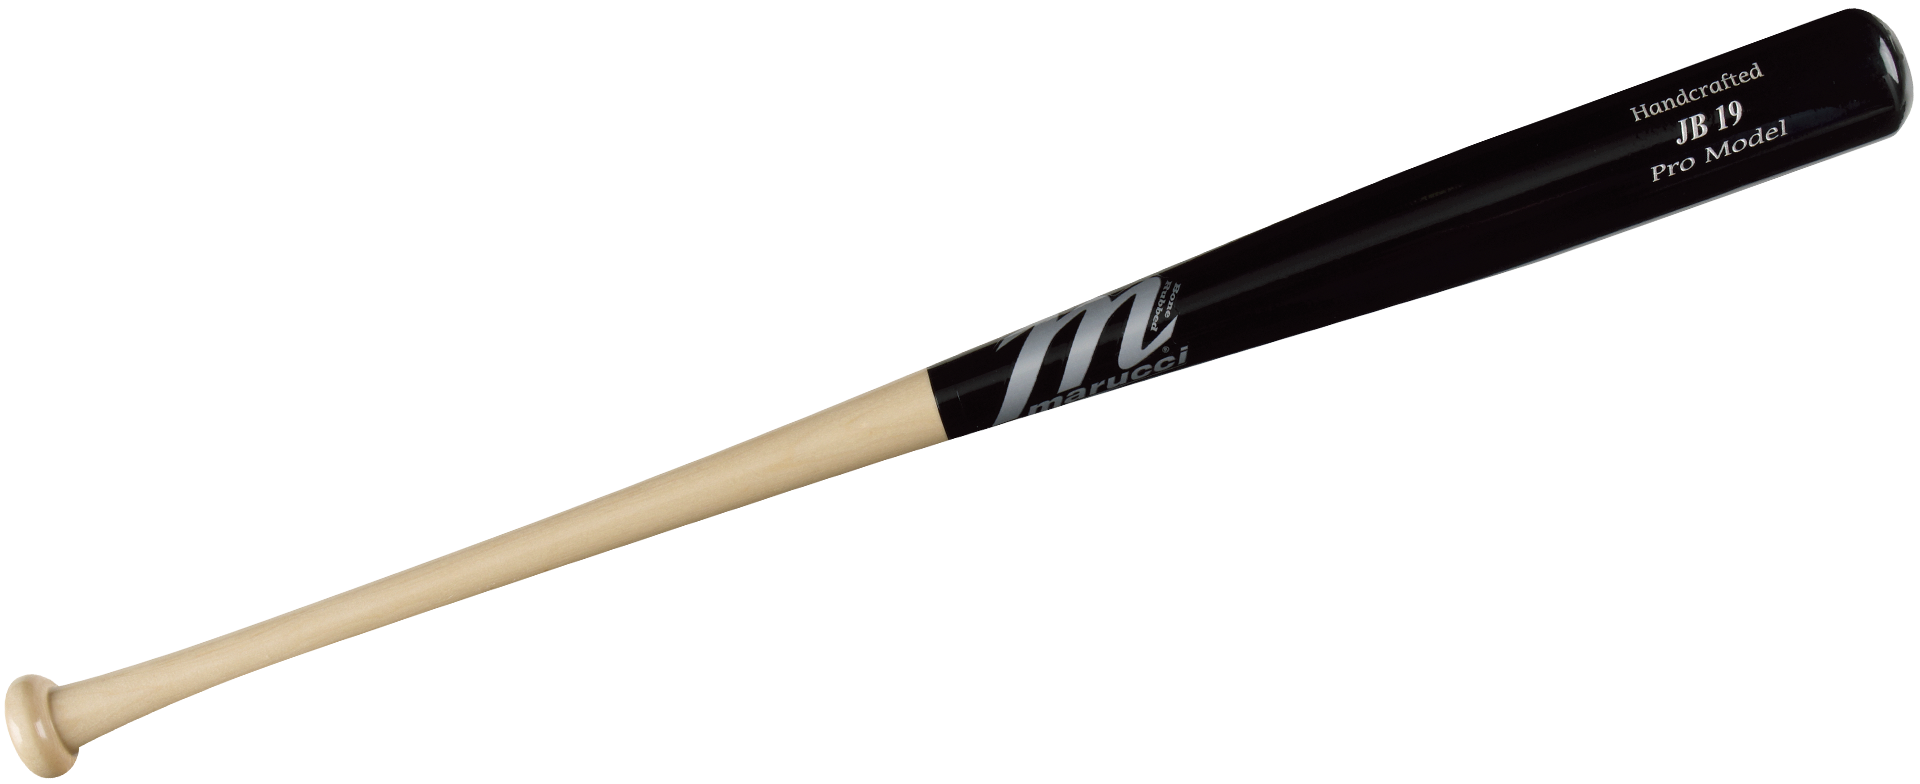 JB19 Maple Pro Model Baseball Bat | Wood Bats - ClipArt Best ...